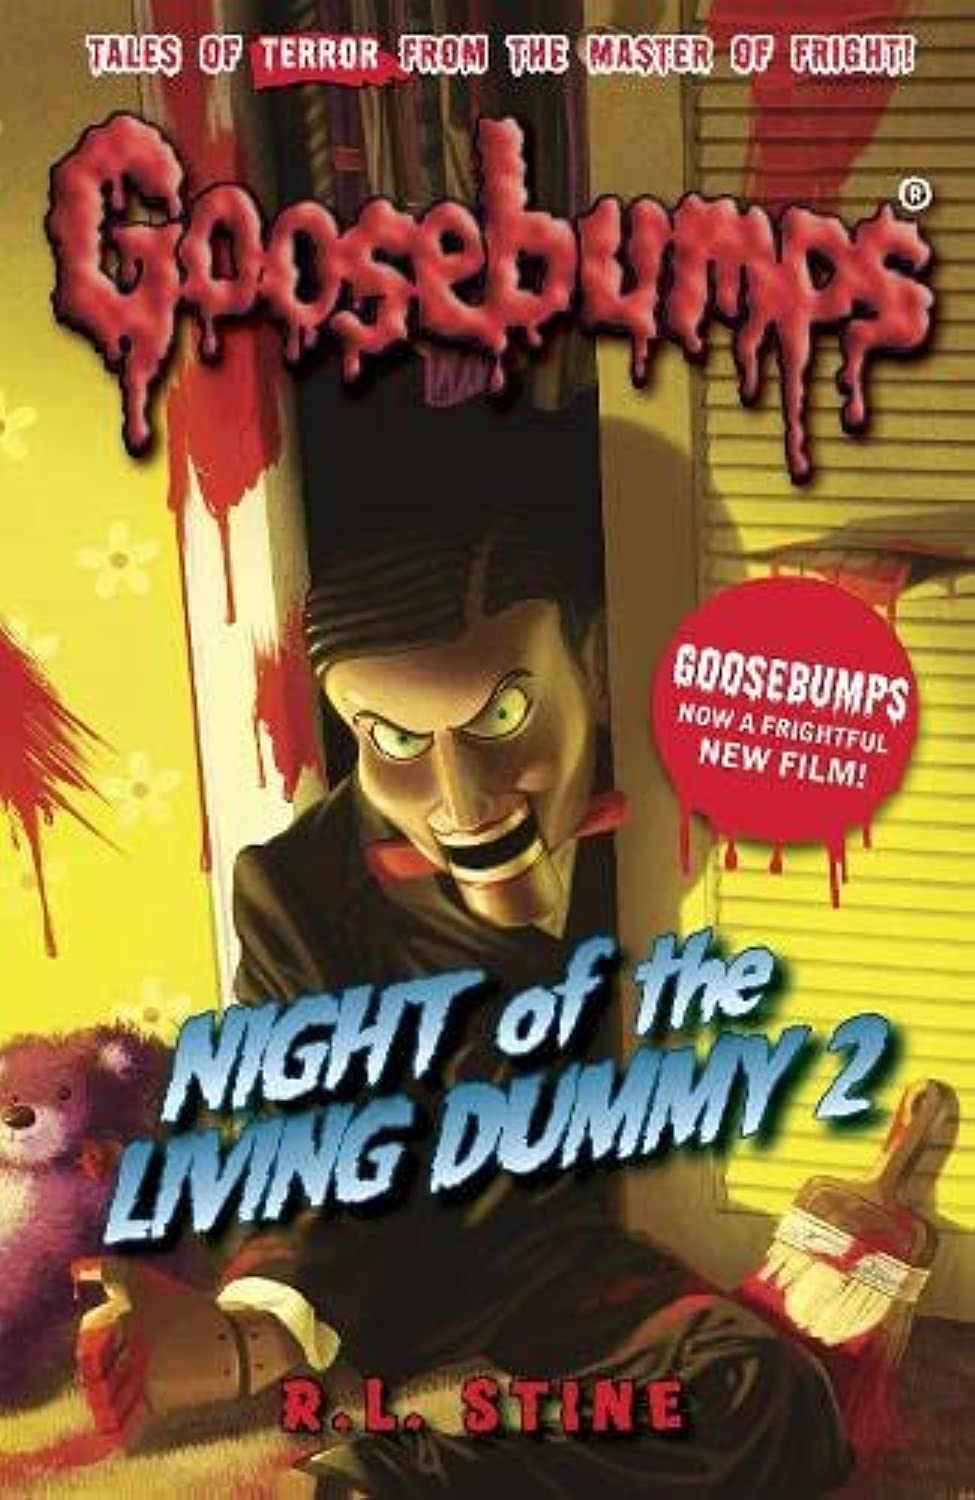 Night Of The Living Dummy 2 (Goosebumps)